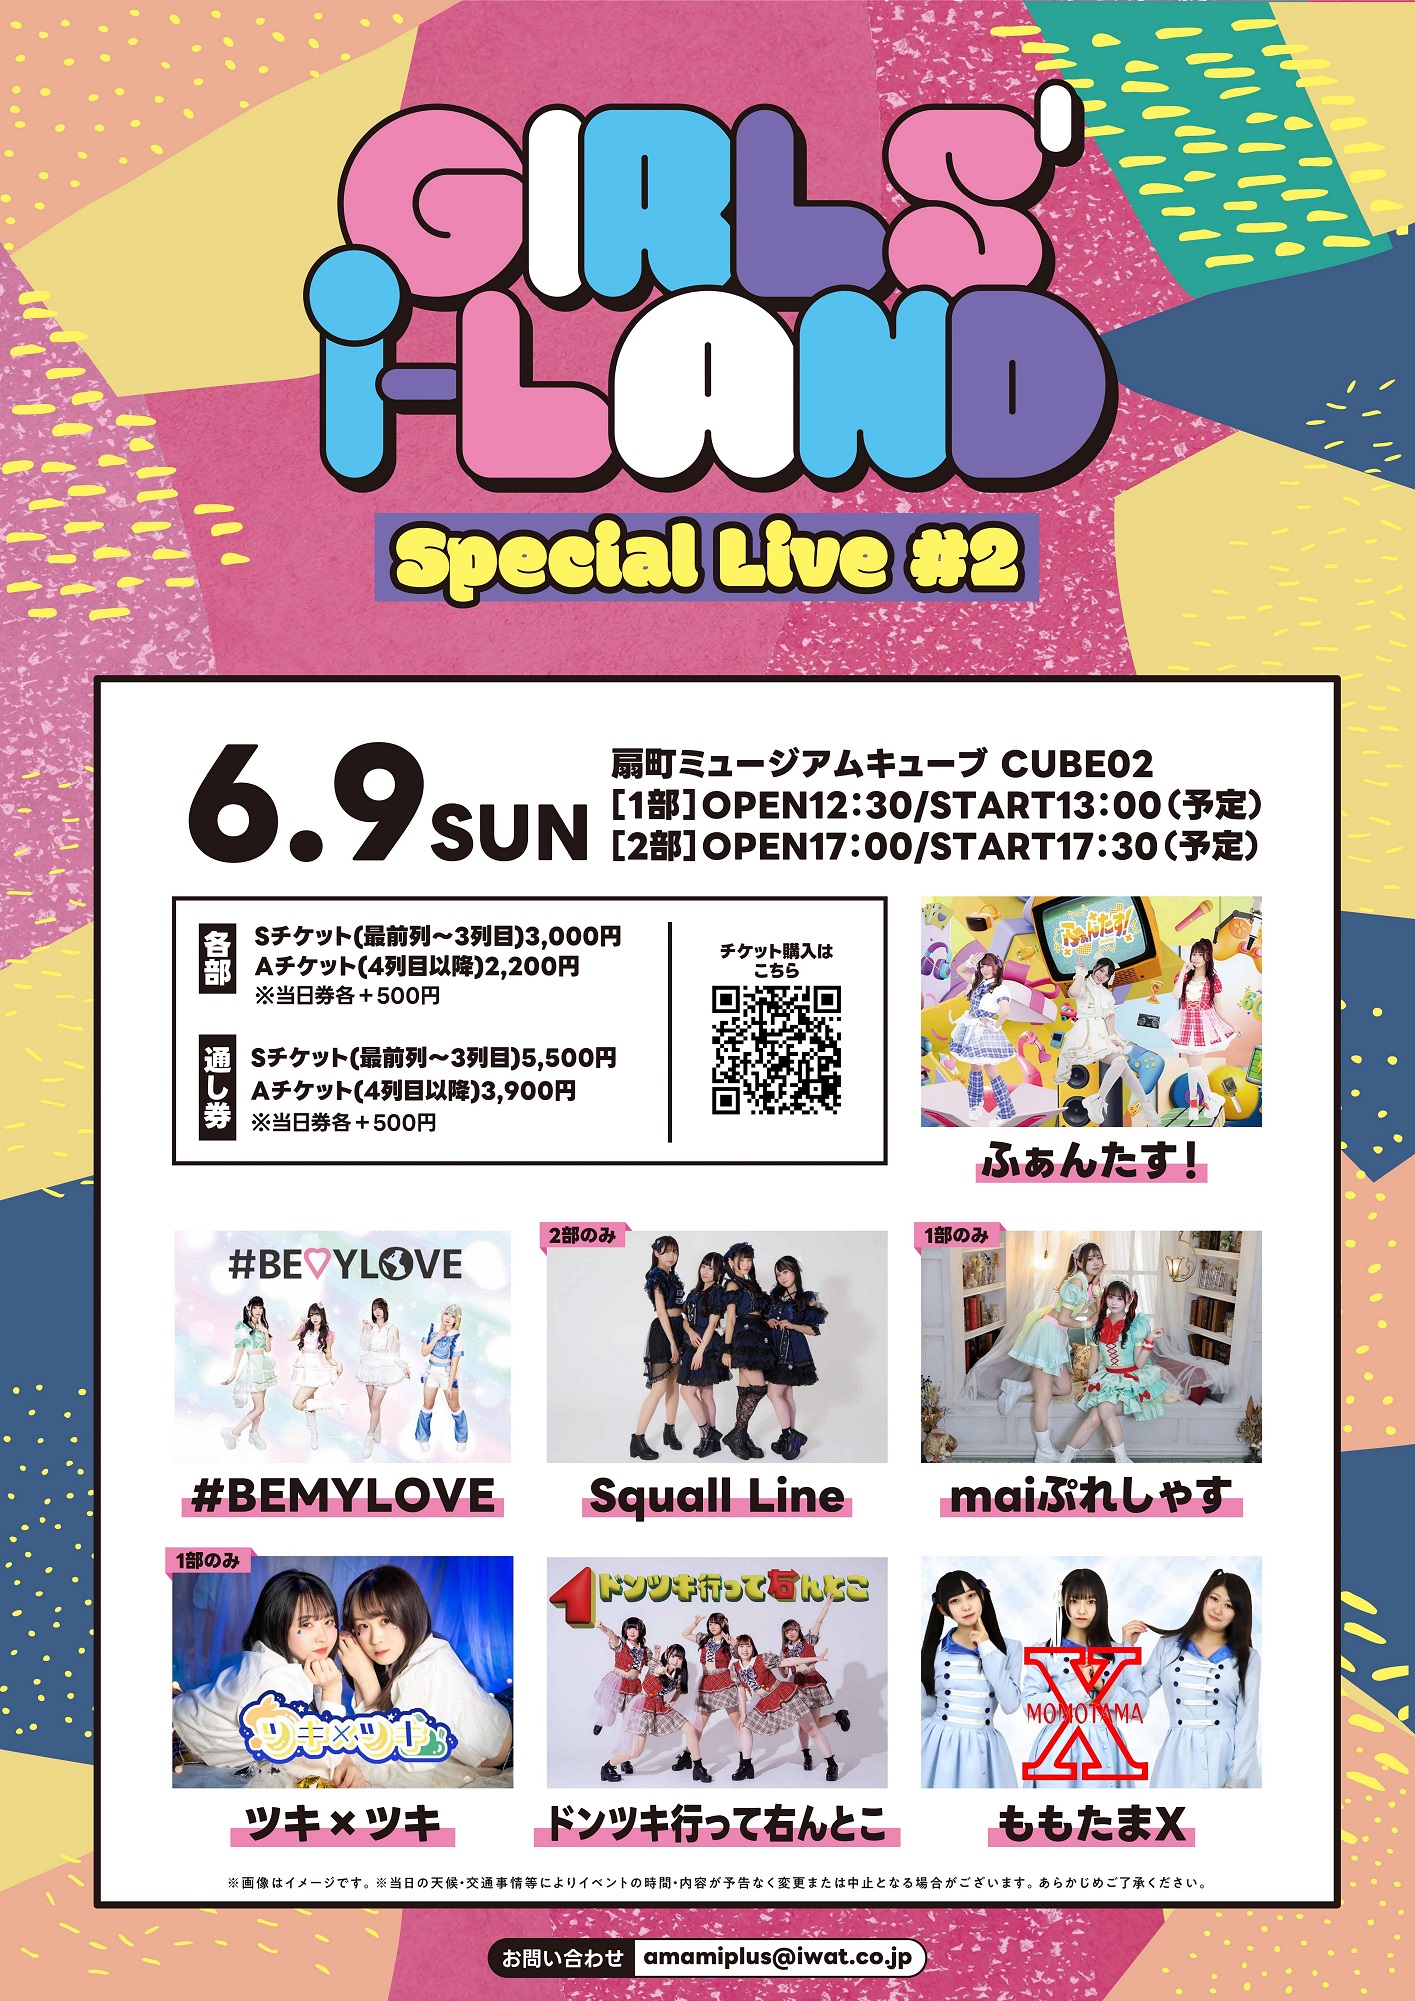 GIRLS’ i-LAND Special Live #2